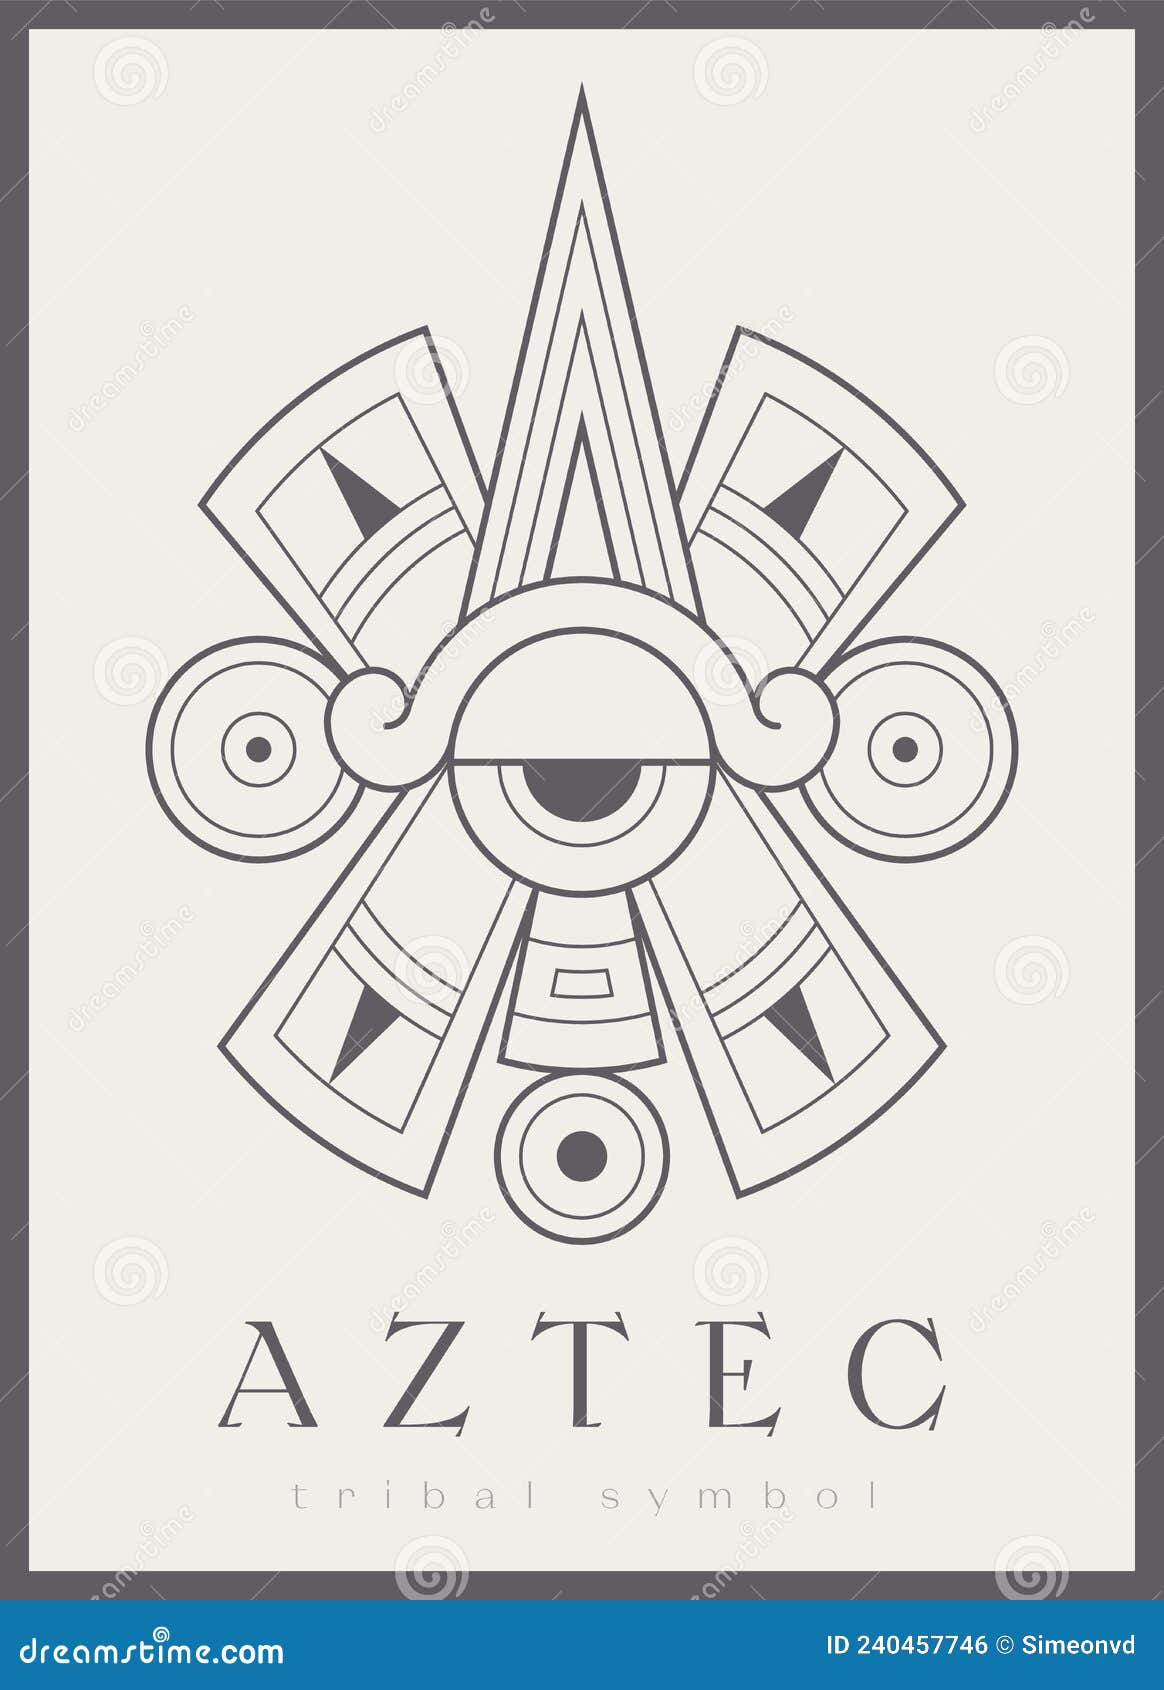 Aztec Tribal Vector Elements. Ethnic Shapes Symbols Design for Logo or Tattoo Stock Vector - Illustration of ancient, arabic: 240457746